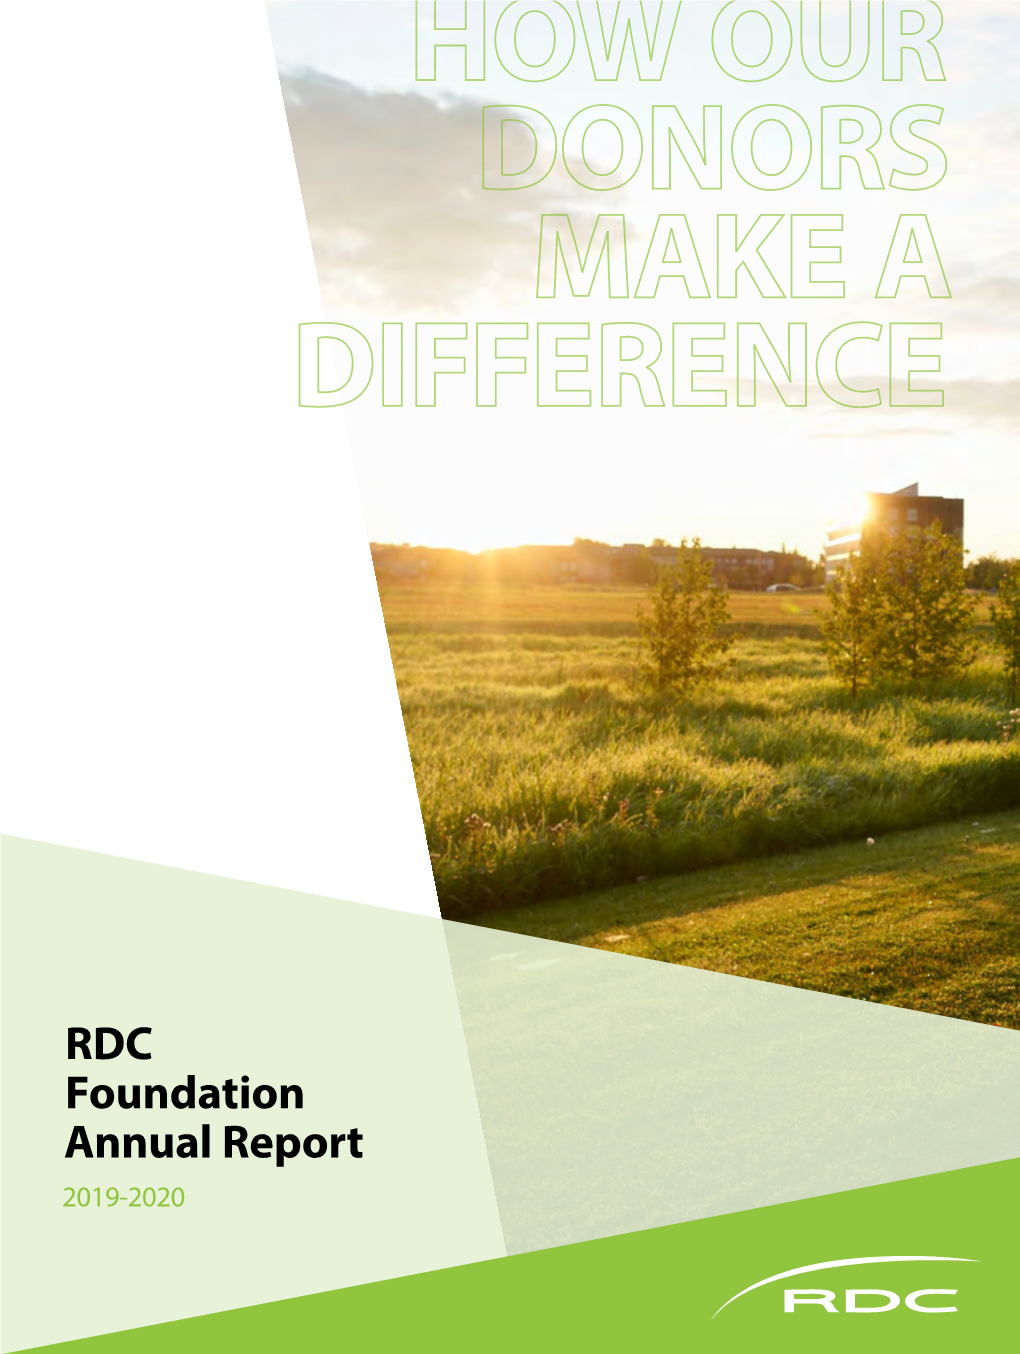 RDC Foundation Annual Report 2019-2020